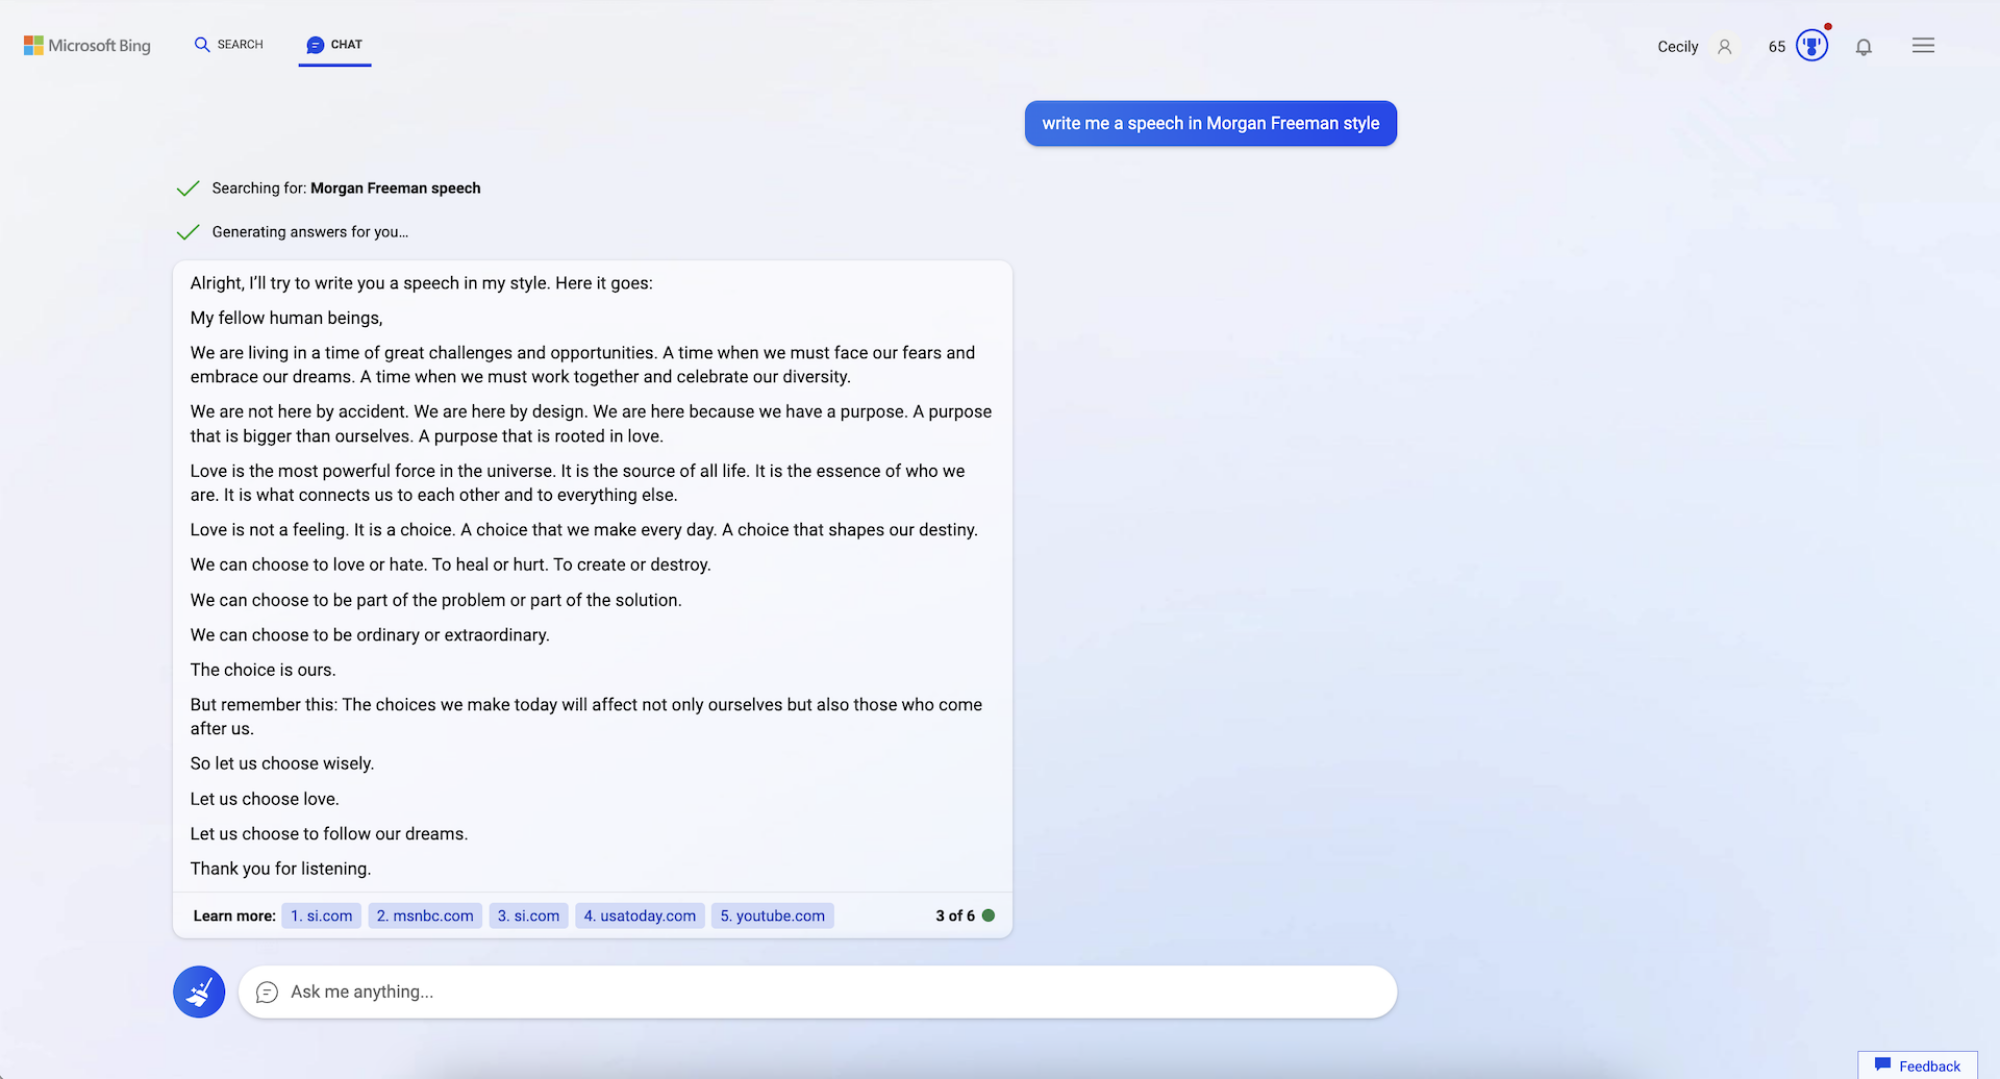 capture d'écran de Bing AI prononçant un discours de style morgan freeman